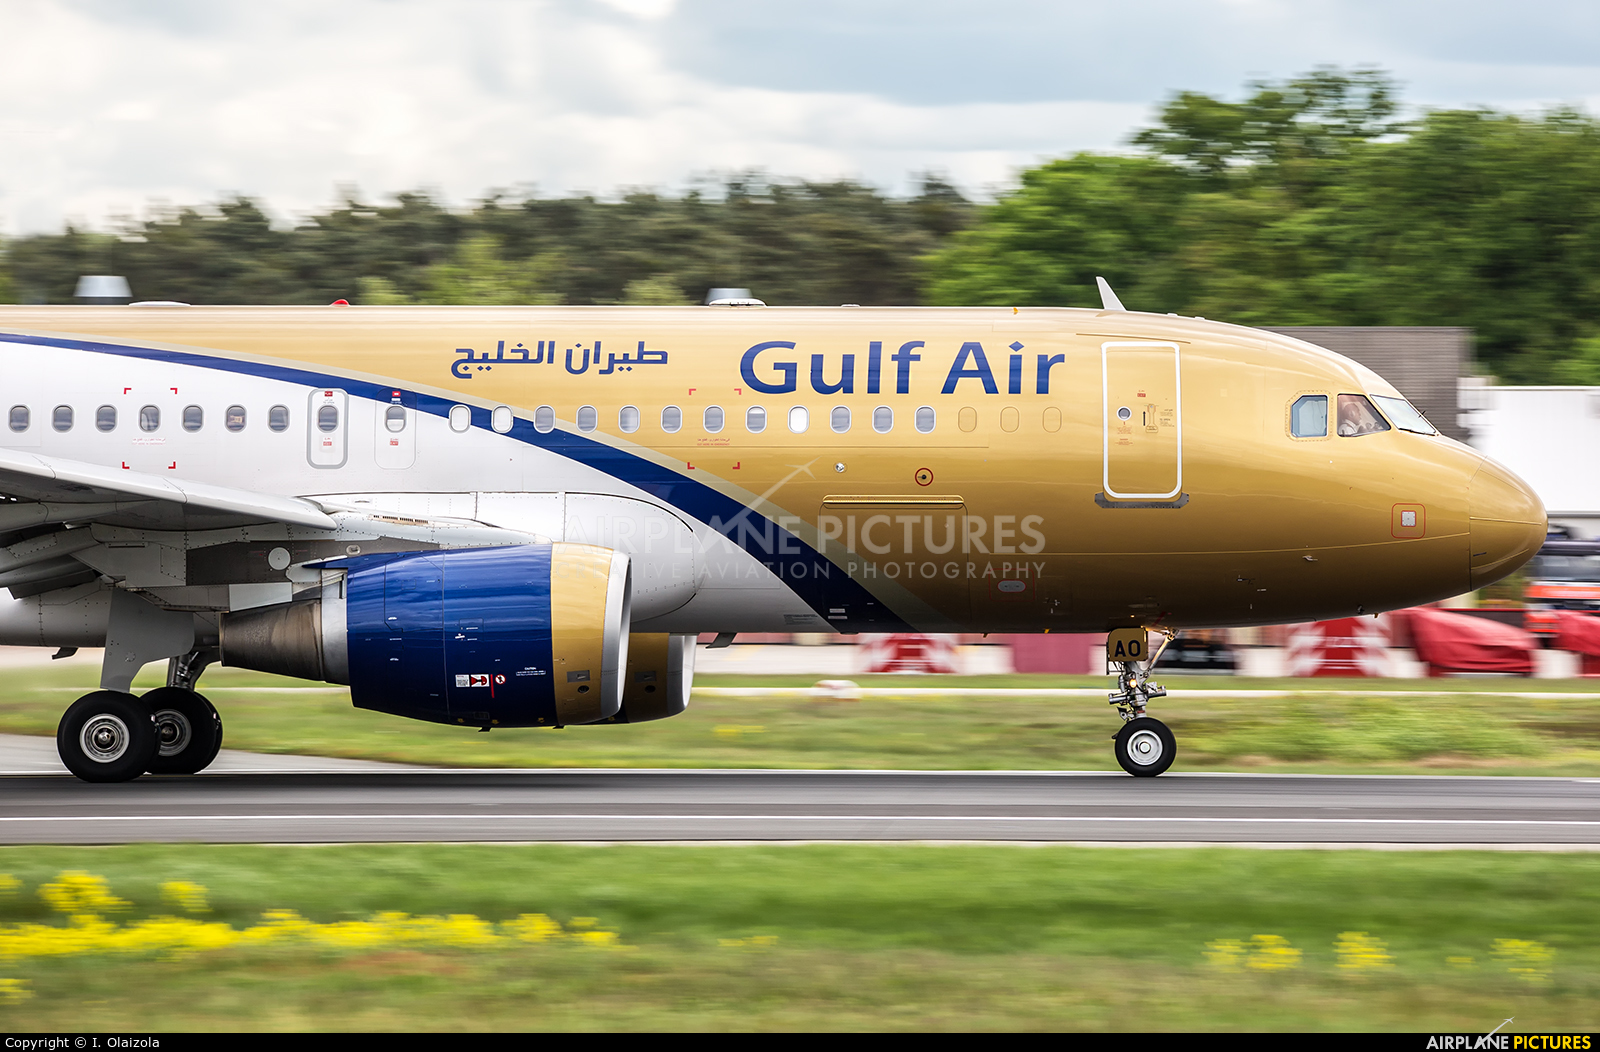 Gulf Air A9C-AO aircraft at Frankfurt